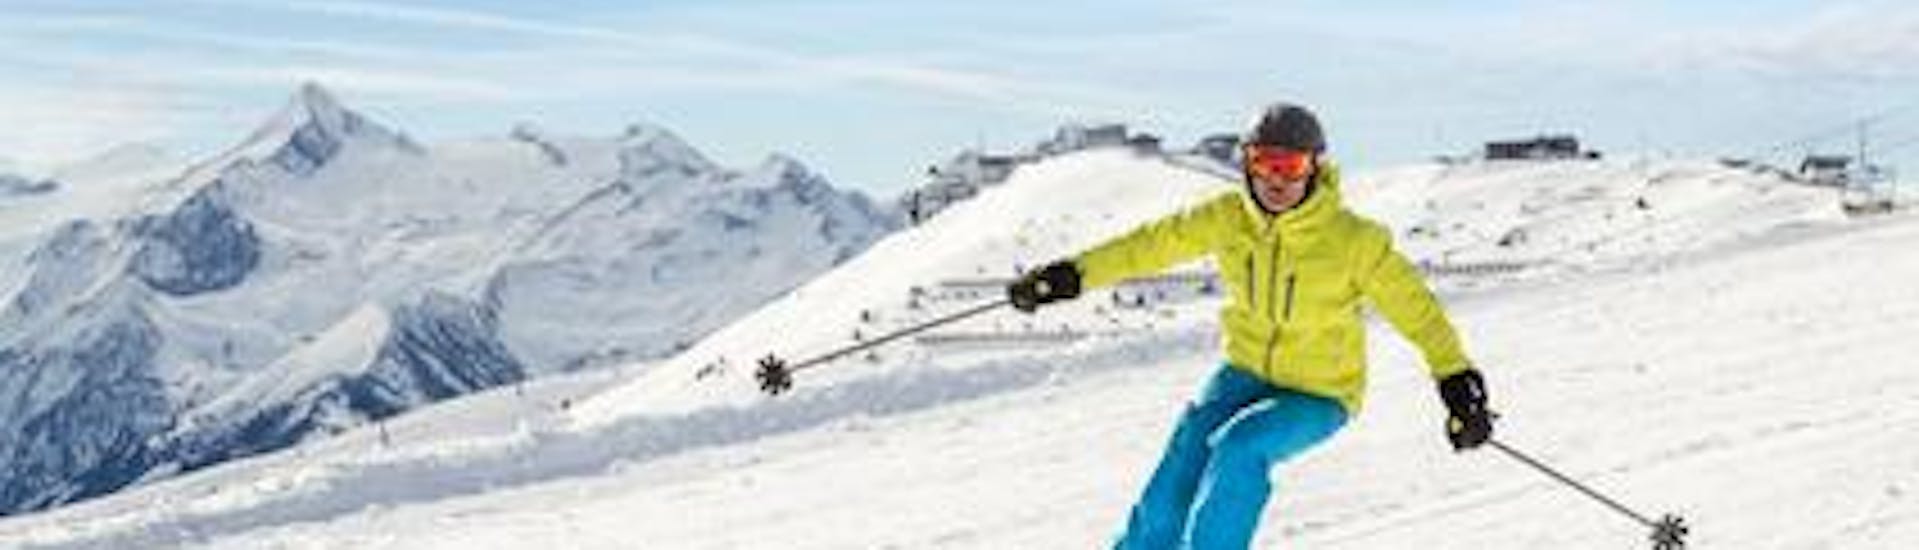 Clases de esquí para adultos a partir de 17 años para debutantes.